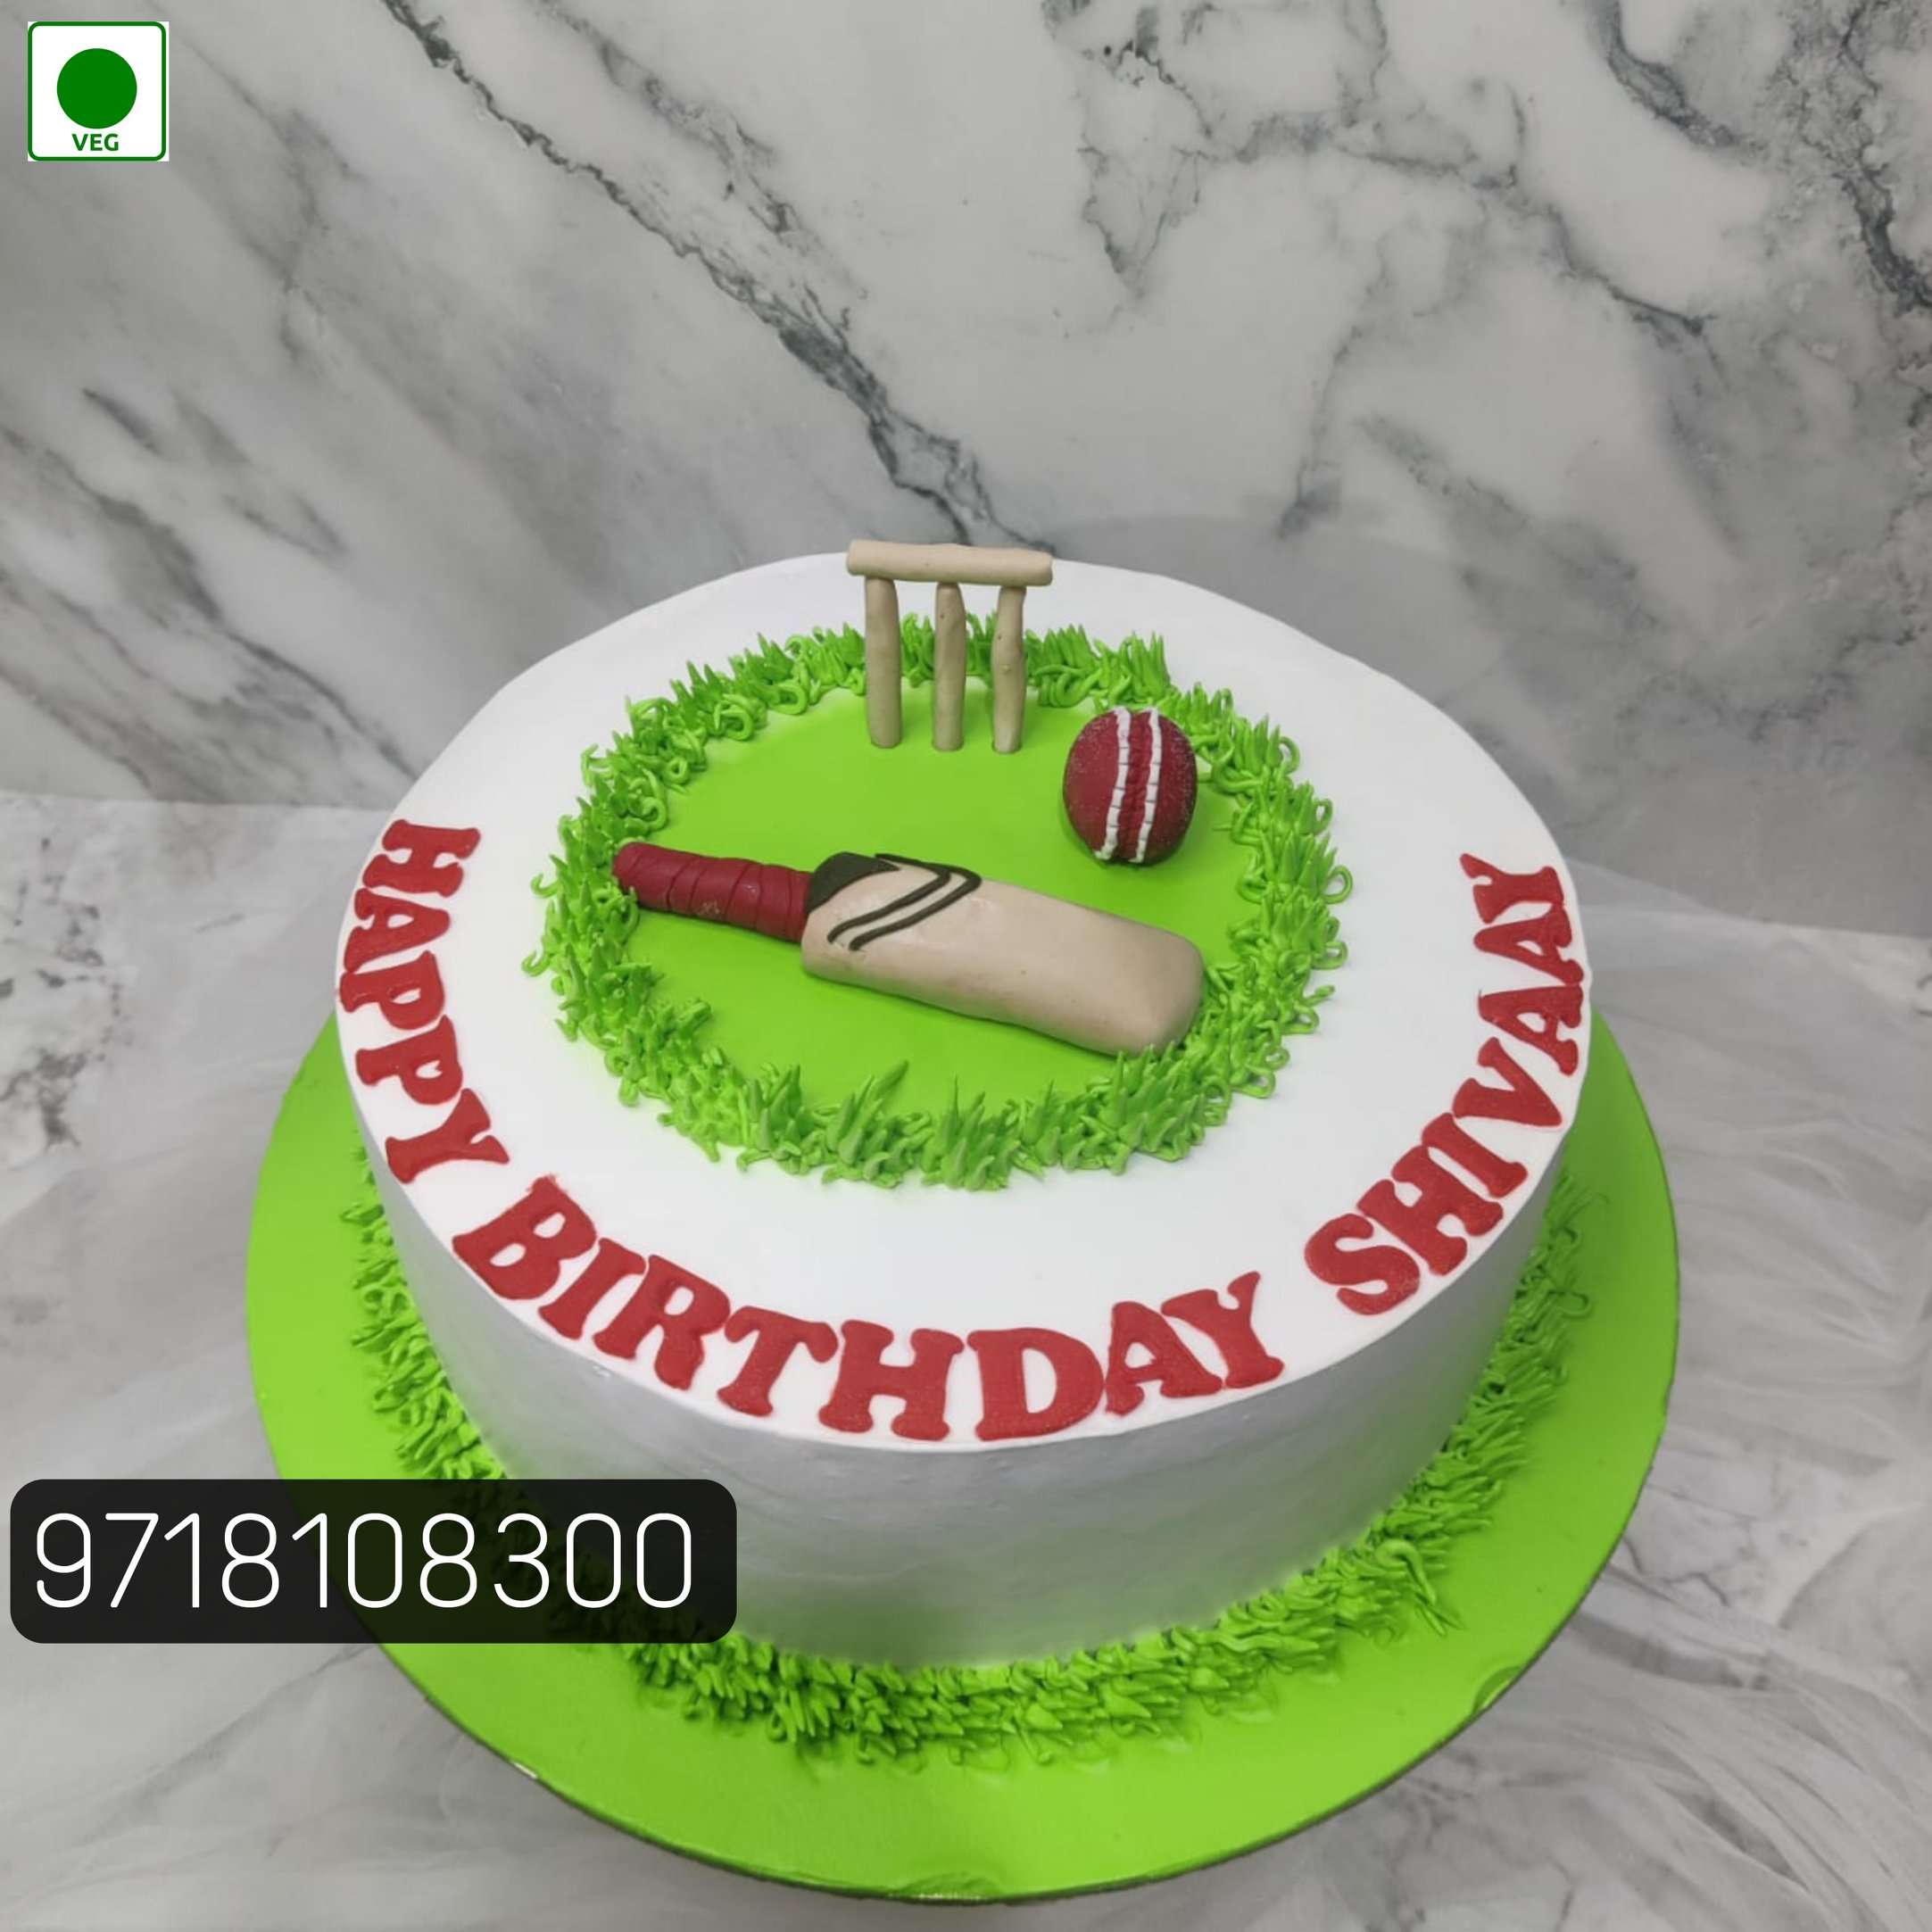 Football-Cricket theme cake decoration | Butterscotch cake decoration | -  YouTube